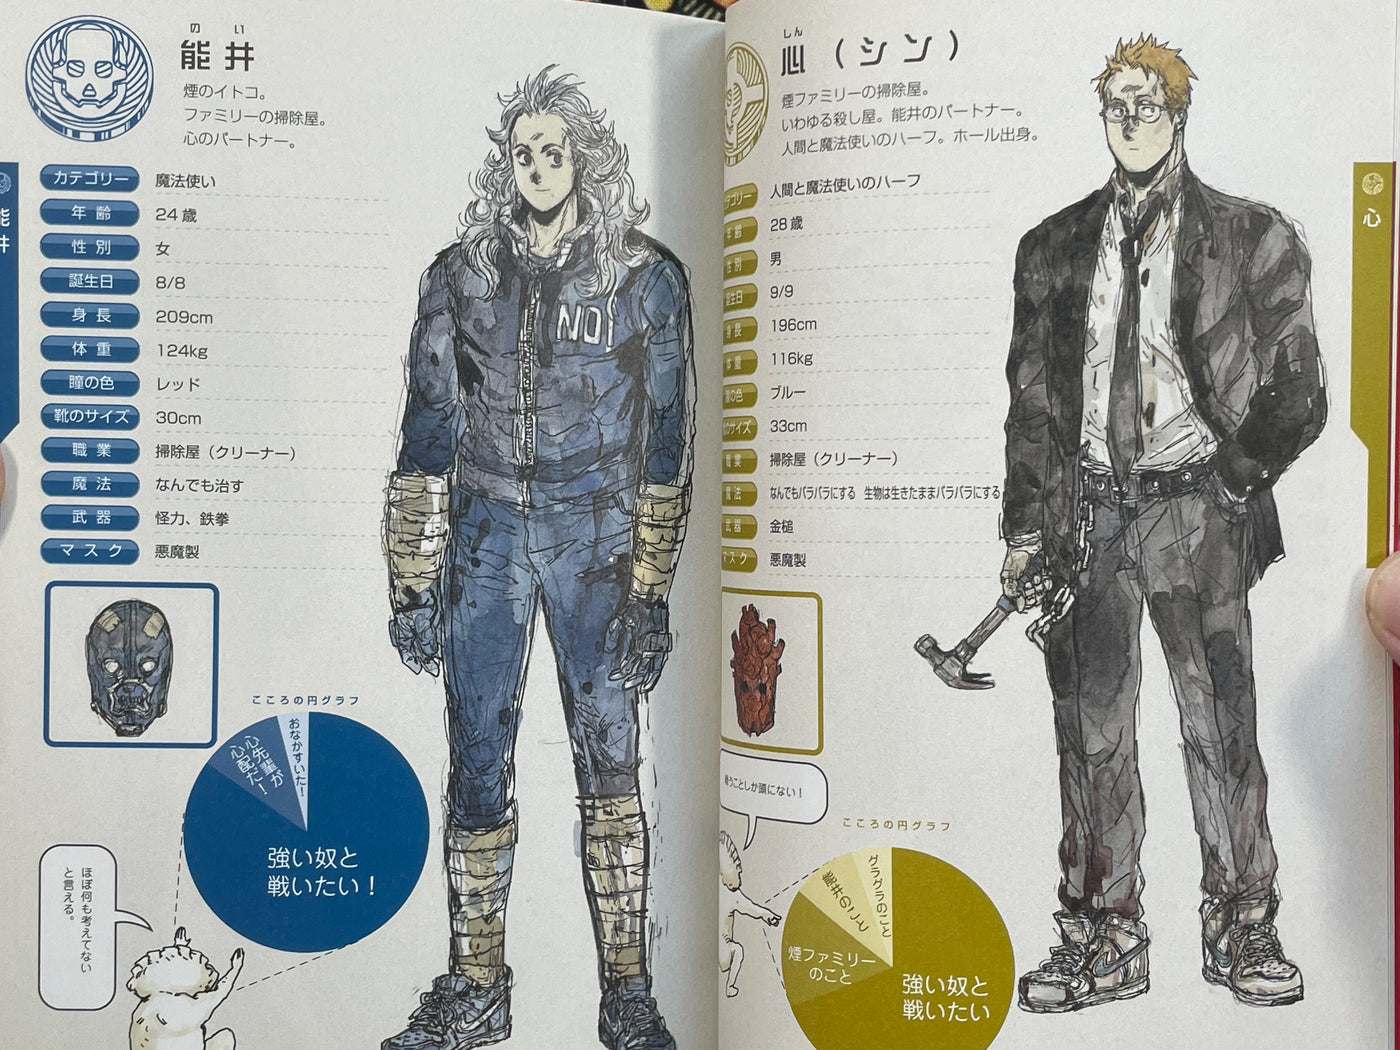 Dorohedoro All-Star Character Guide (2013) by Q. Hayashida